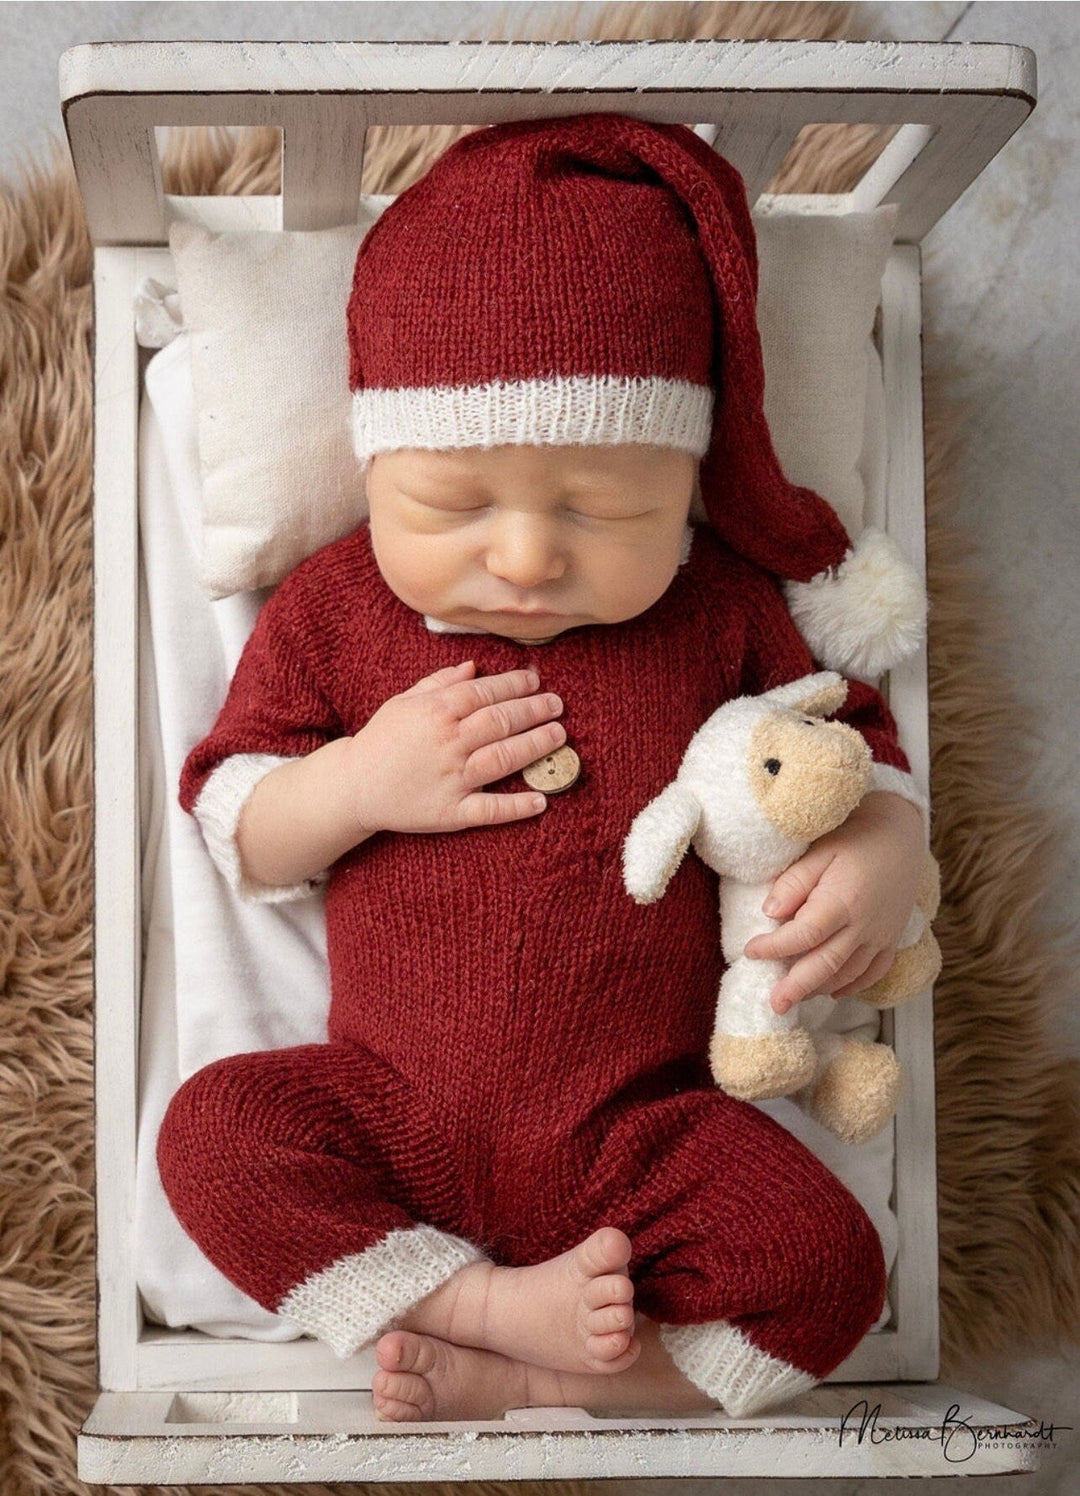 Soft Knitted Newborn One-Piece and Hat - Plum Sugar Shoppe